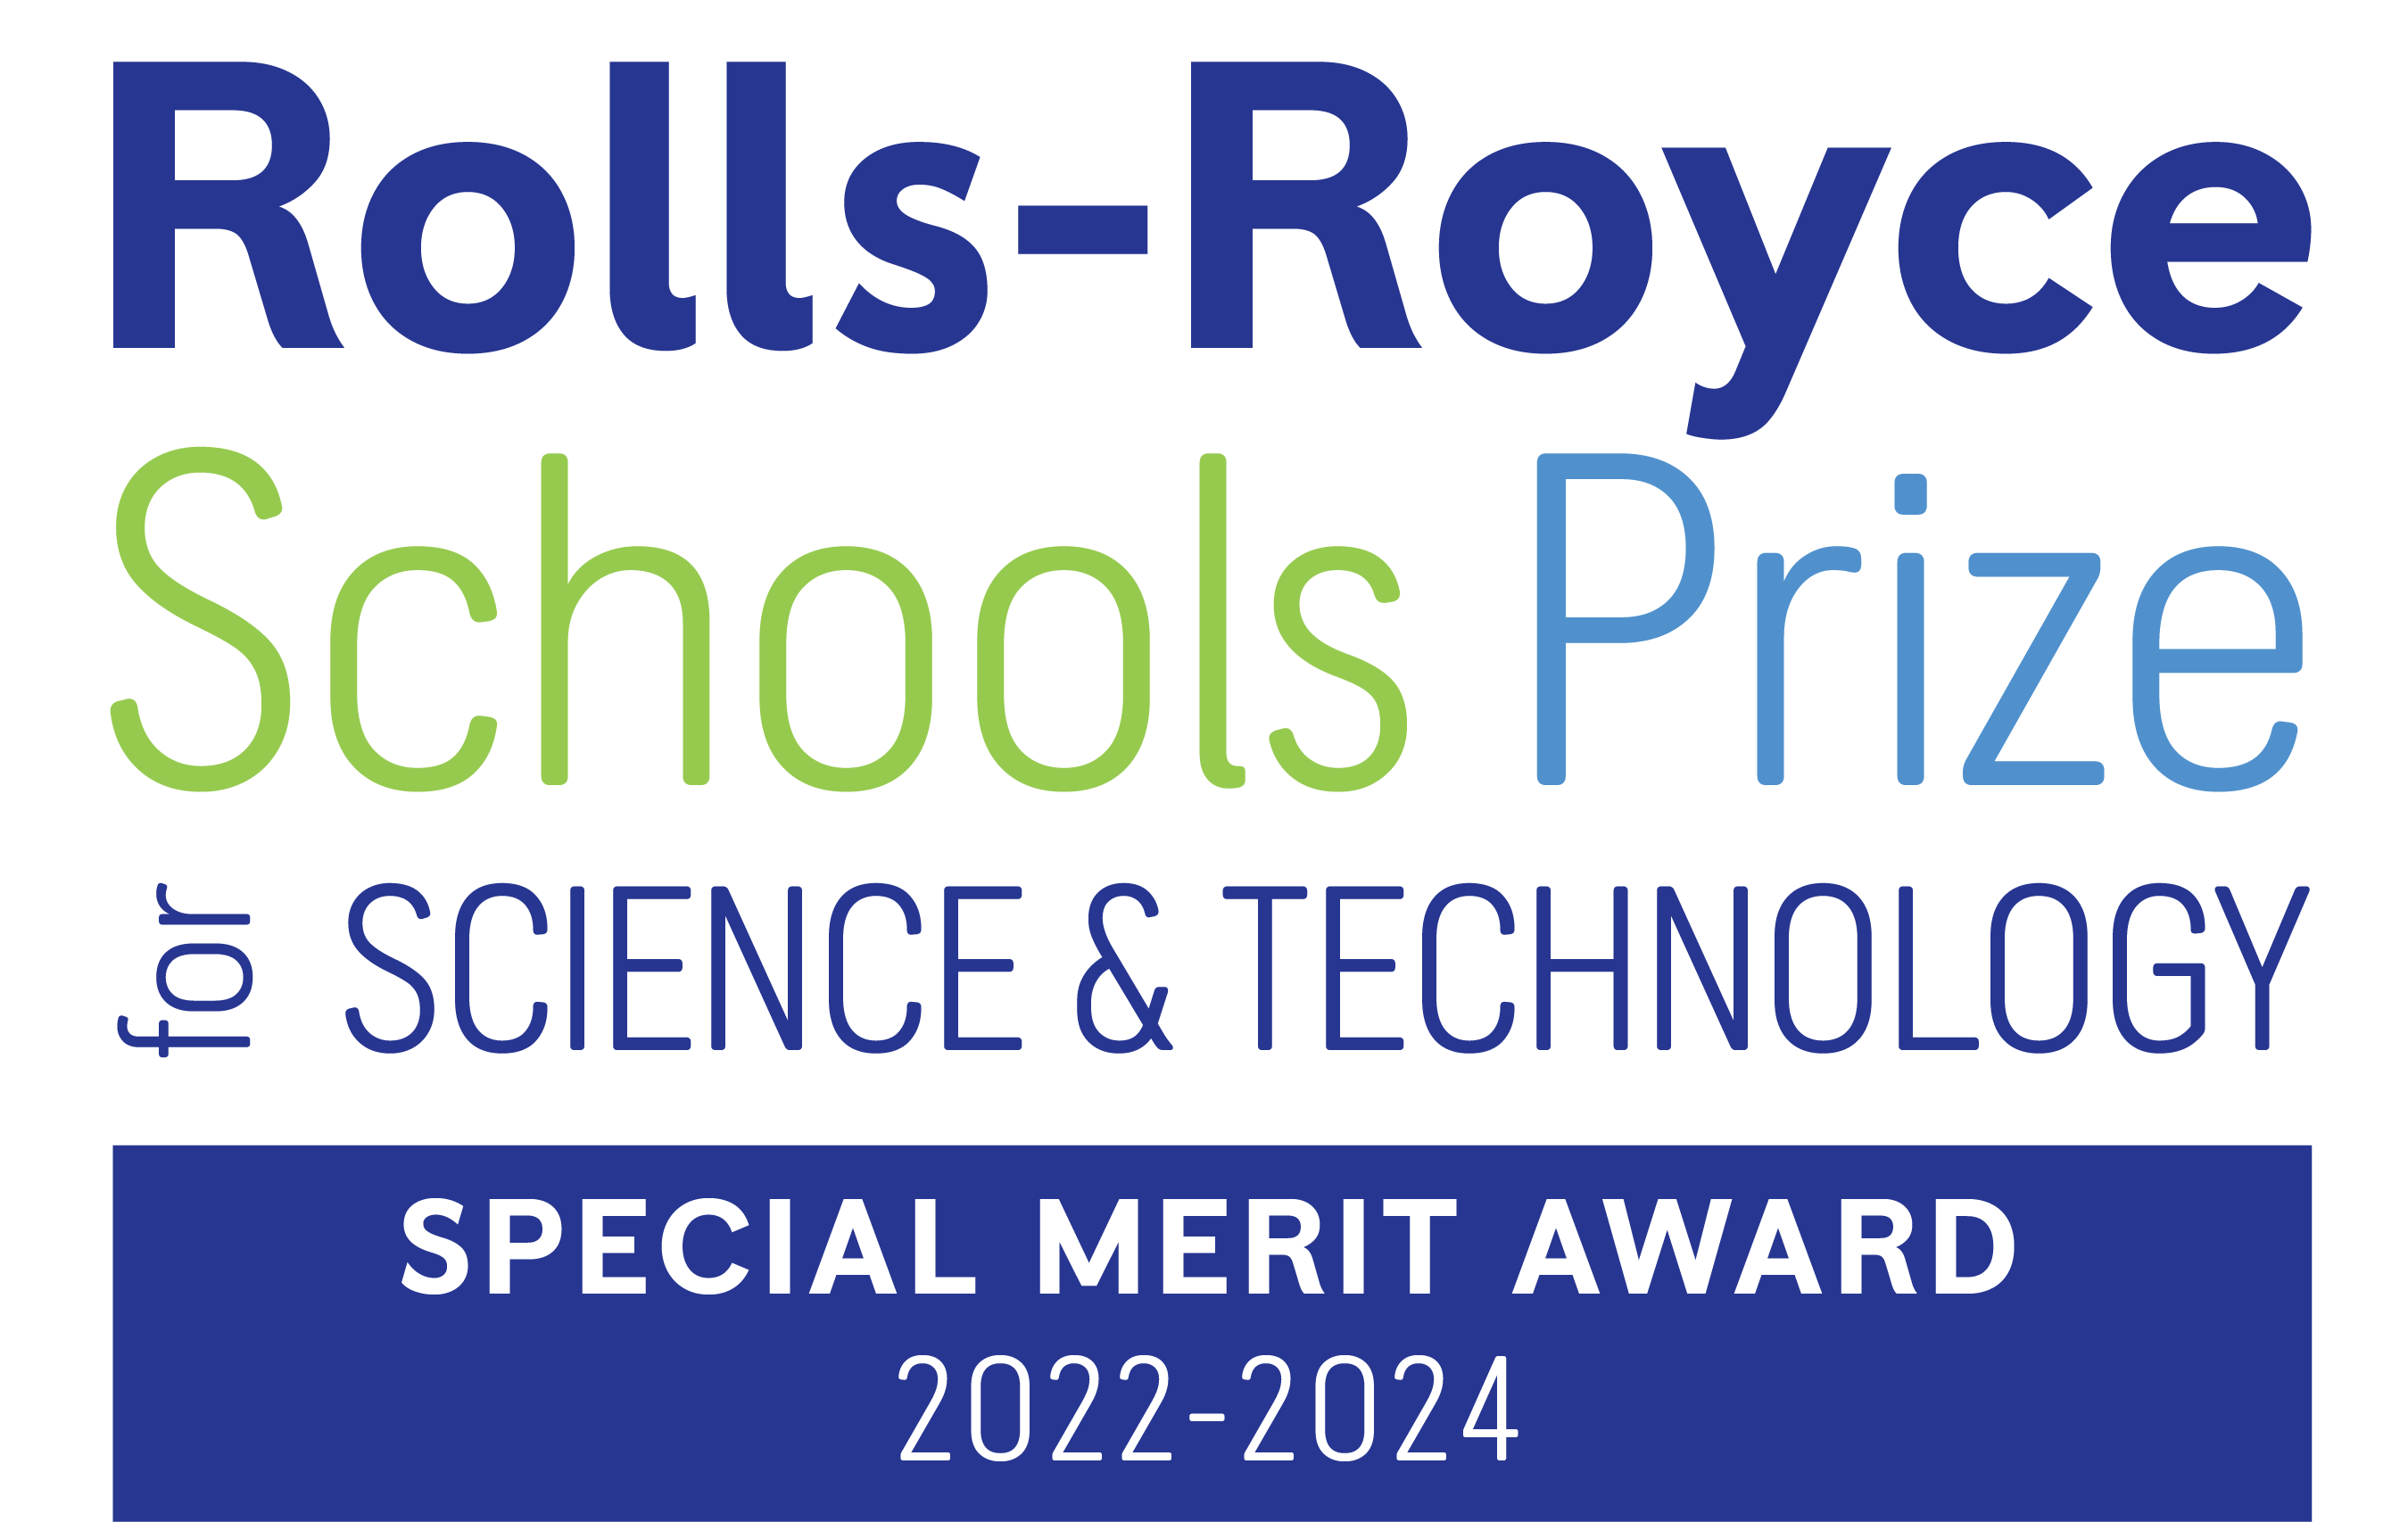 Rr schools prize special merit award logo